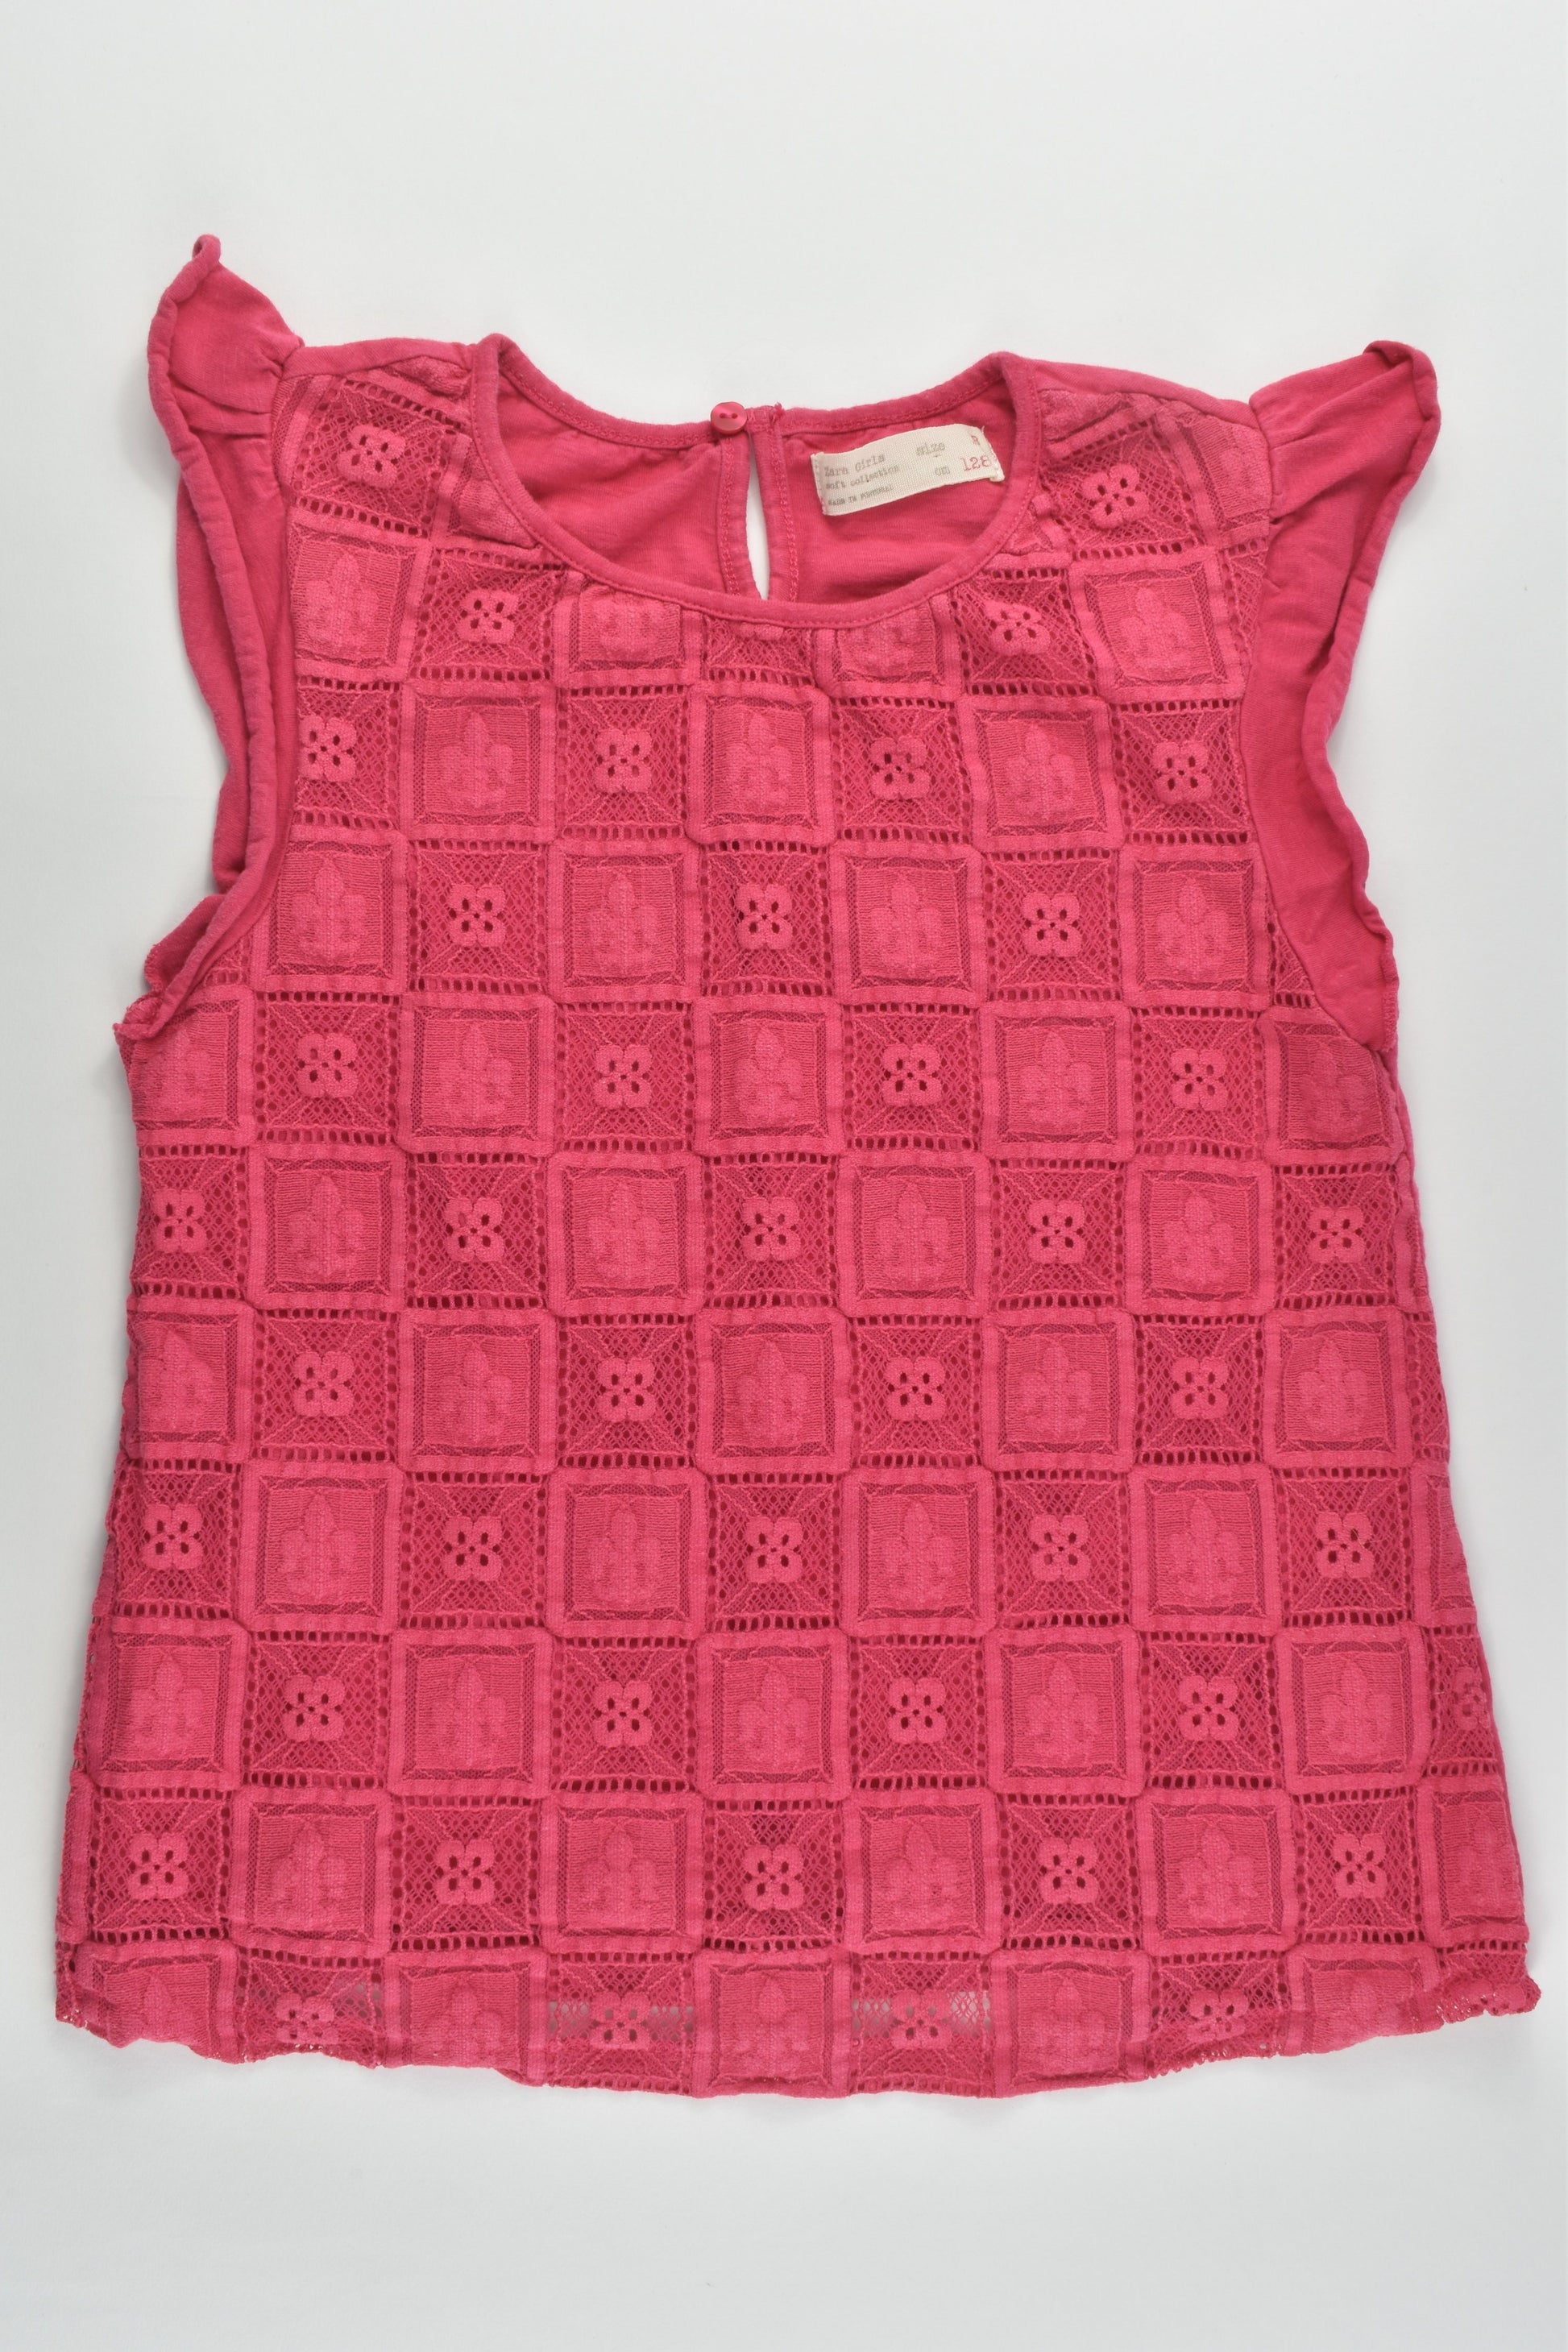 Zara Size 8 (128 cm) Lined Lace T-shirt